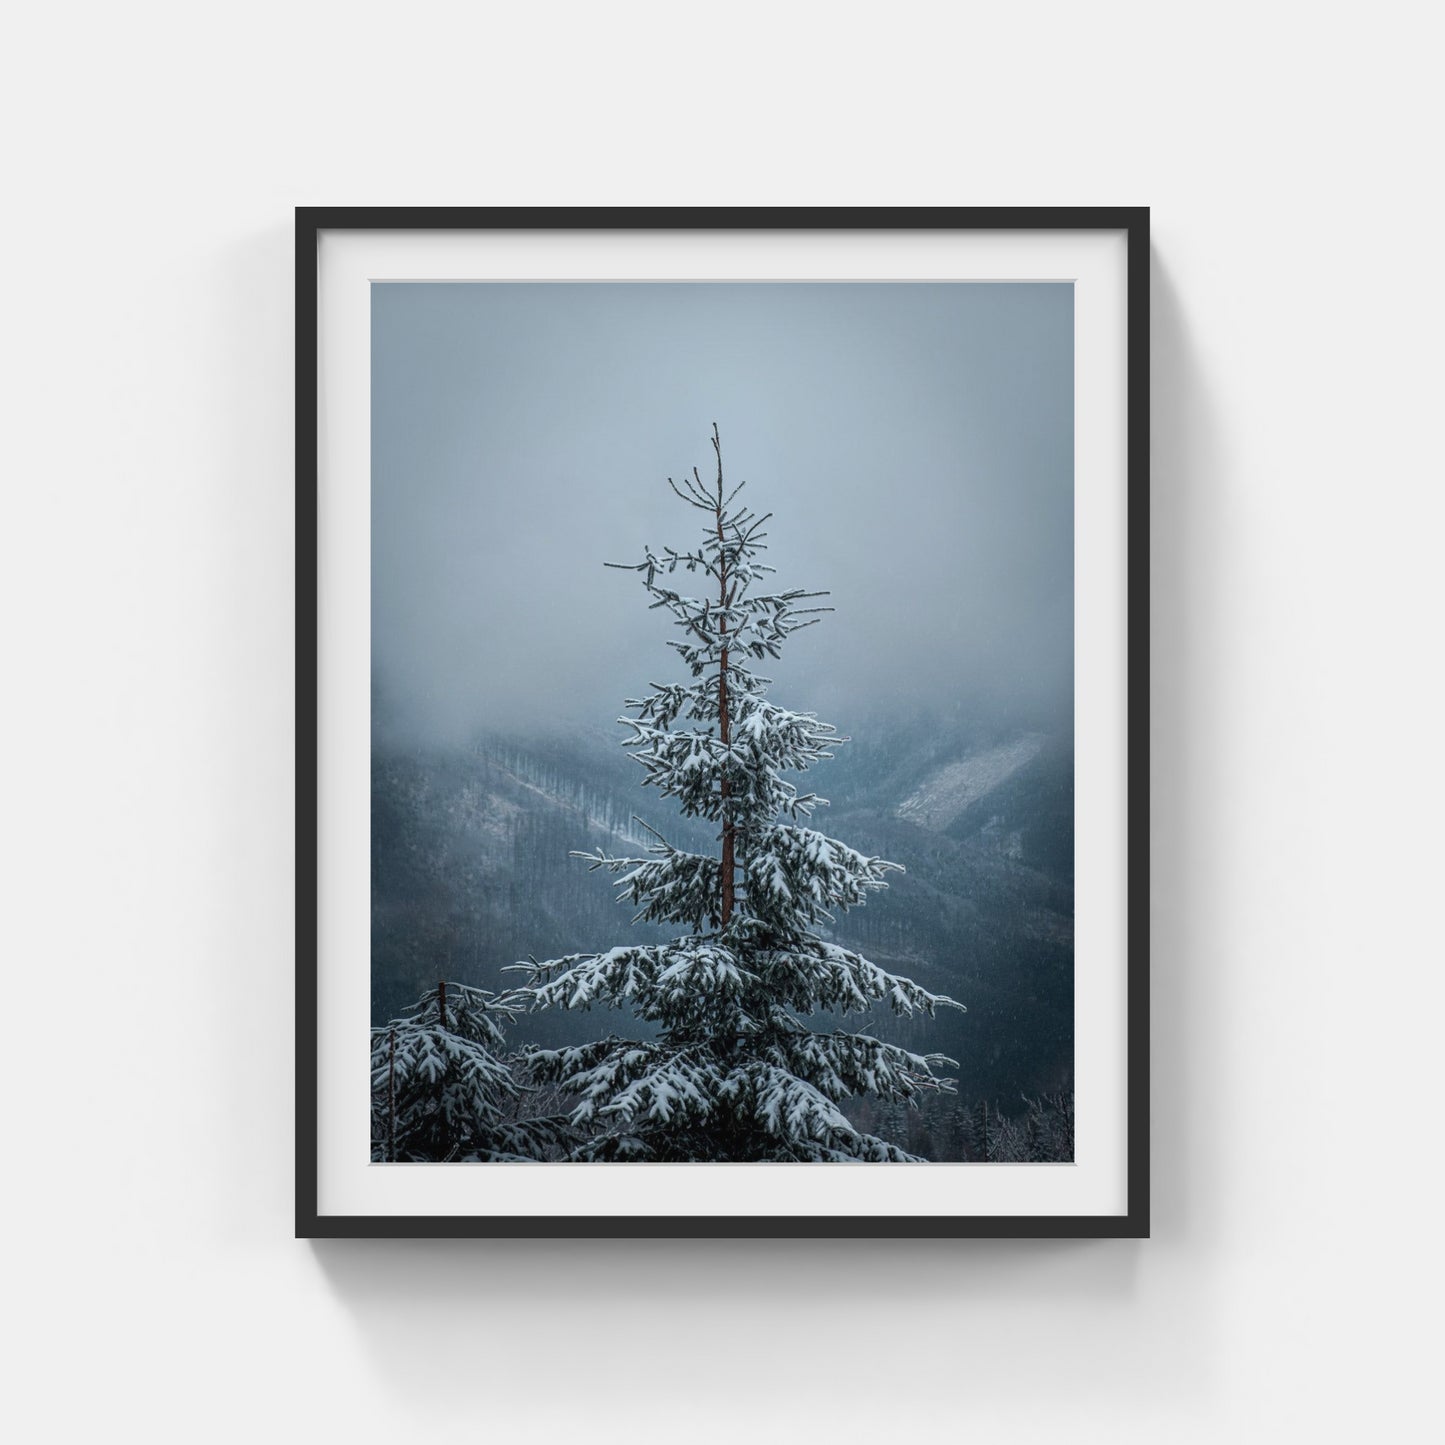 Snowy Treetop – Lysa Hora, Czech Republic, 2020